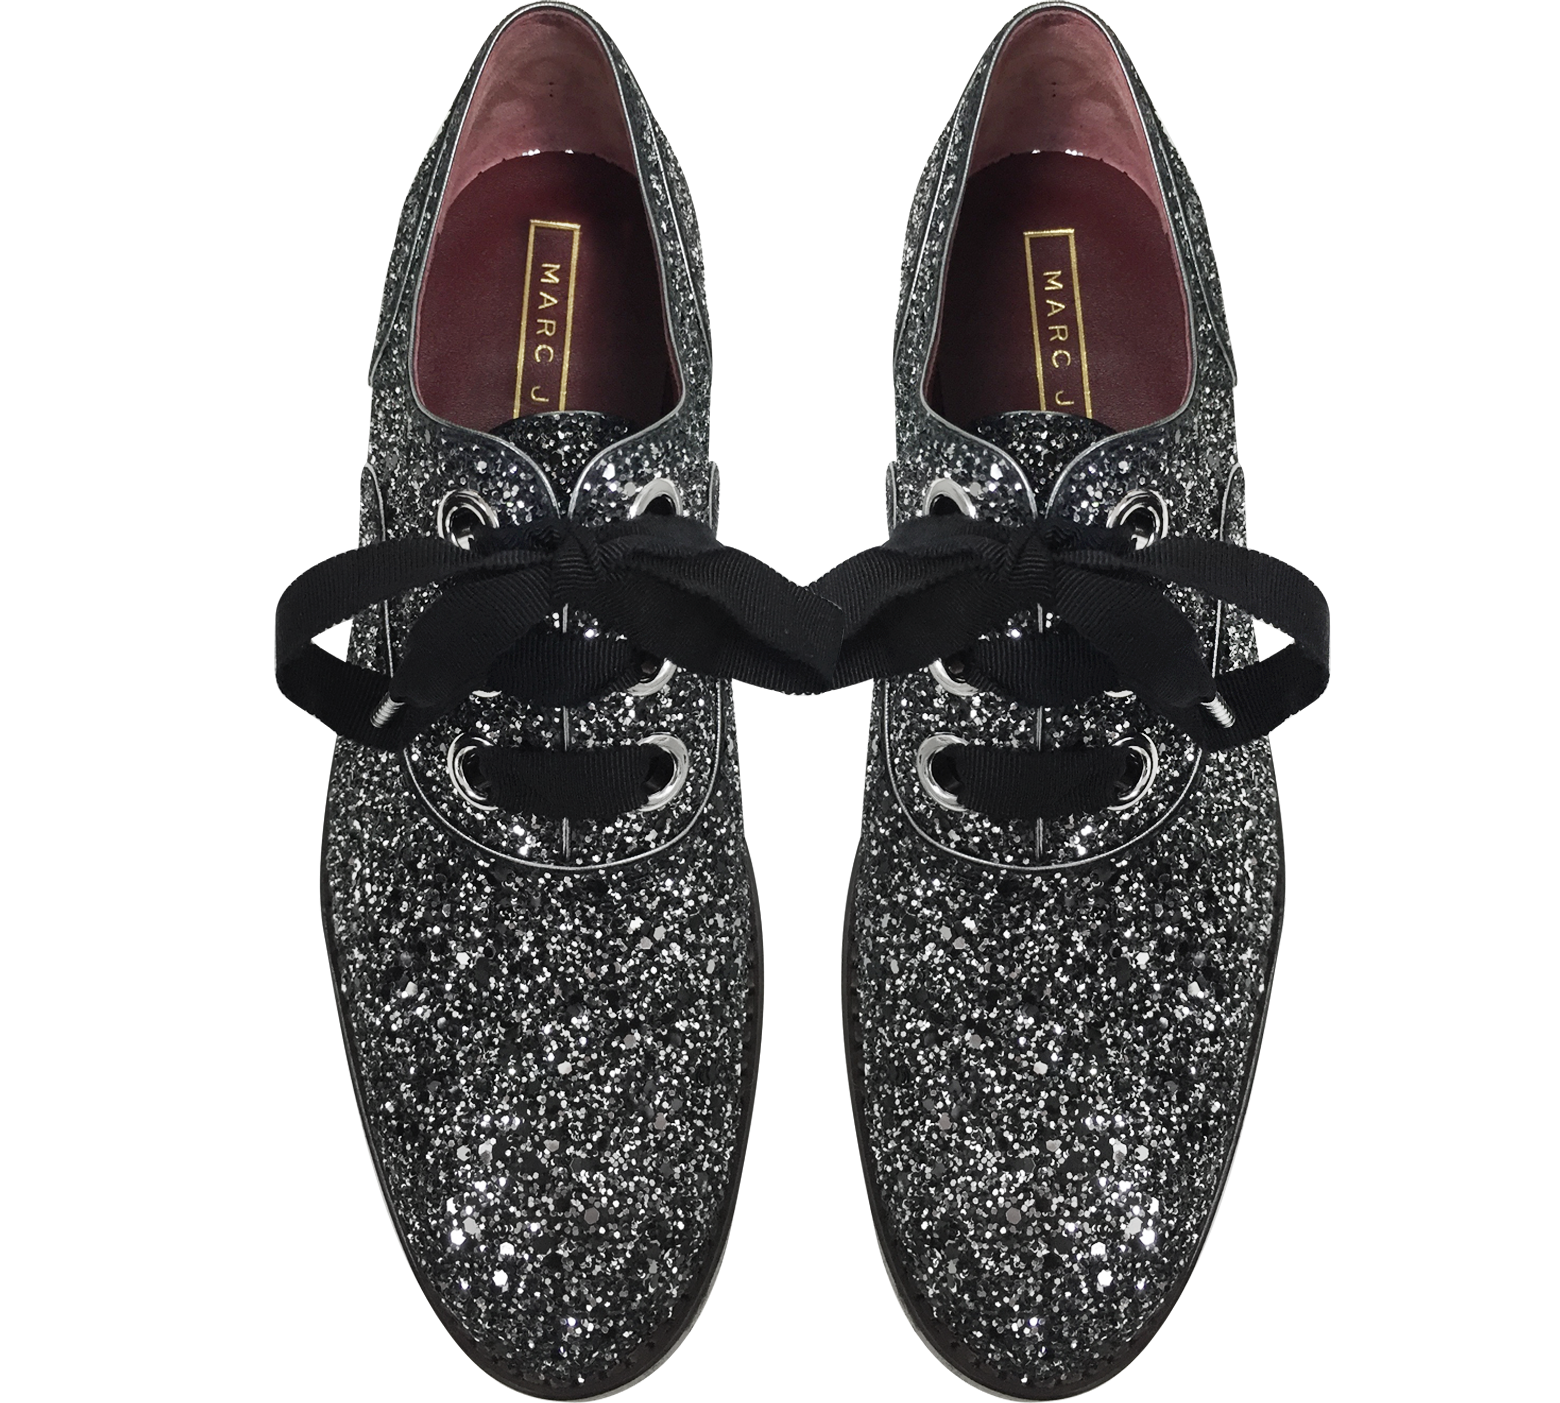 Marc Jacobs Helena Silver Glitter Oxford Shoe 36 IT/EU at FORZIERI